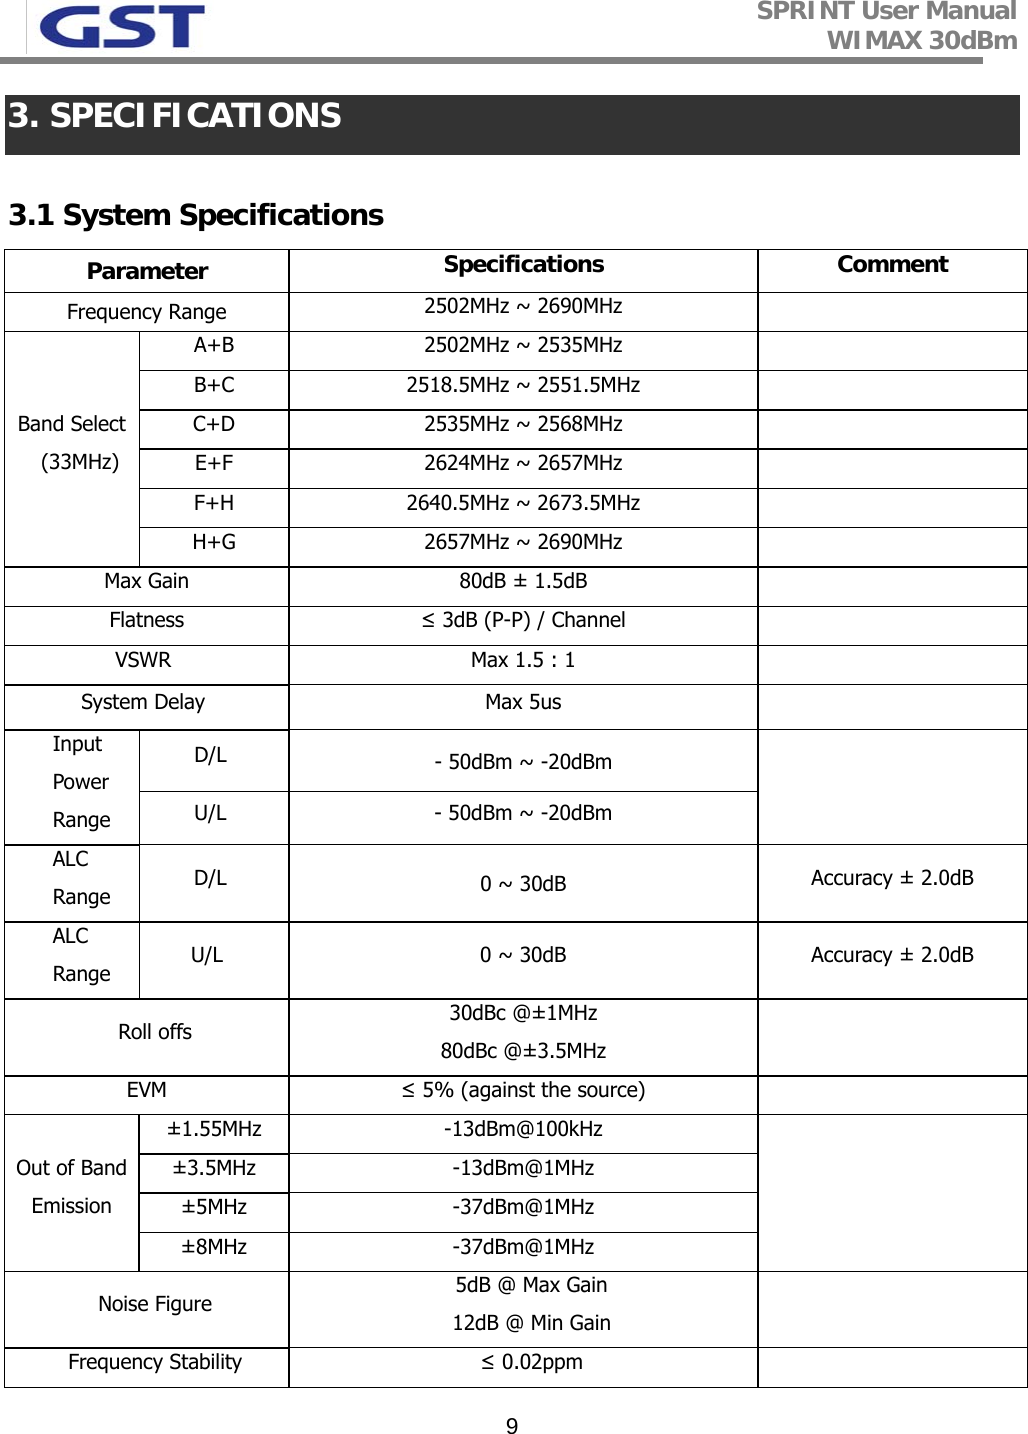 SPRINT User Manual WIMAX 30dBm   93. SPECIFICATIONS  3.1 System Specifications Parameter  Specifications Comment Frequency Range  2502MHz ~ 2690MHz   A+B  2502MHz ~ 2535MHz   B+C  2518.5MHz ~ 2551.5MHz   C+D  2535MHz ~ 2568MHz   E+F  2624MHz ~ 2657MHz   F+H  2640.5MHz ~ 2673.5MHz   Band Select (33MHz) H+G  2657MHz ~ 2690MHz   Max Gain  80dB ± 1.5dB   Flatness  ≤ 3dB (P-P) / Channel   VSWR  Max 1.5 : 1   System Delay  Max 5us   D/L  - 50dBm ~ -20dBm Input Power Range  U/L  - 50dBm ~ -20dBm  ALC Range  D/L  0 ~ 30dB  Accuracy ± 2.0dB ALC  Range  U/L  0 ~ 30dB  Accuracy ± 2.0dB Roll offs  30dBc @±1MHz 80dBc @±3.5MHz   EVM  ≤ 5% (against the source)   ±1.55MHz -13dBm@100kHz ±3.5MHz -13dBm@1MHz ±5MHz -37dBm@1MHz Out of Band Emission ±8MHz -37dBm@1MHz    Noise Figure  5dB @ Max Gain 12dB @ Min Gain   Frequency Stability  ≤ 0.02ppm   